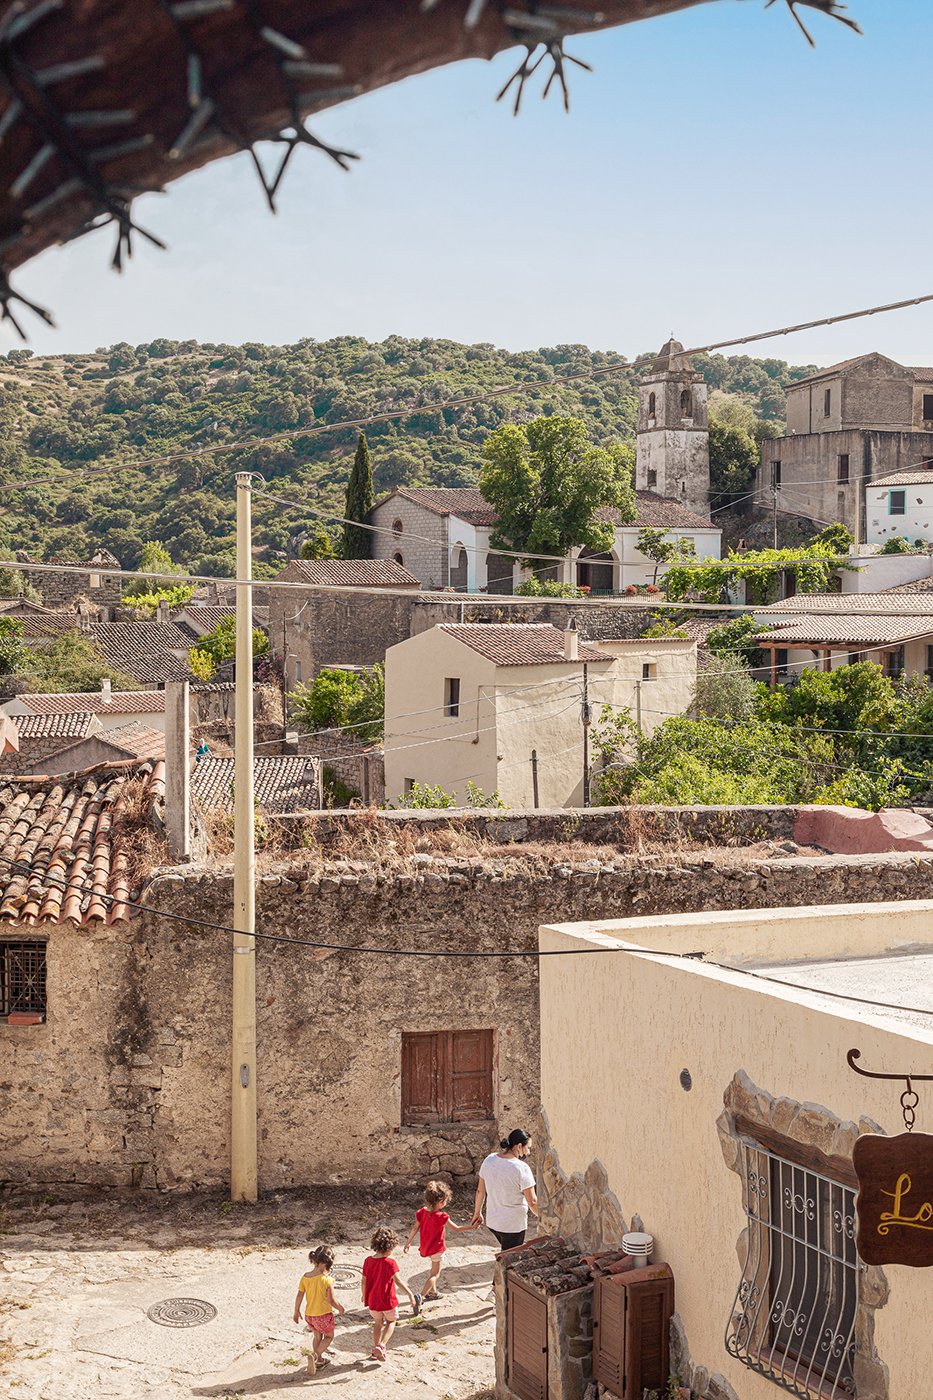 Medieval homes on the hill in Lovelle Sardinia shot by Alberto Bernasconi for Enjoy magazine